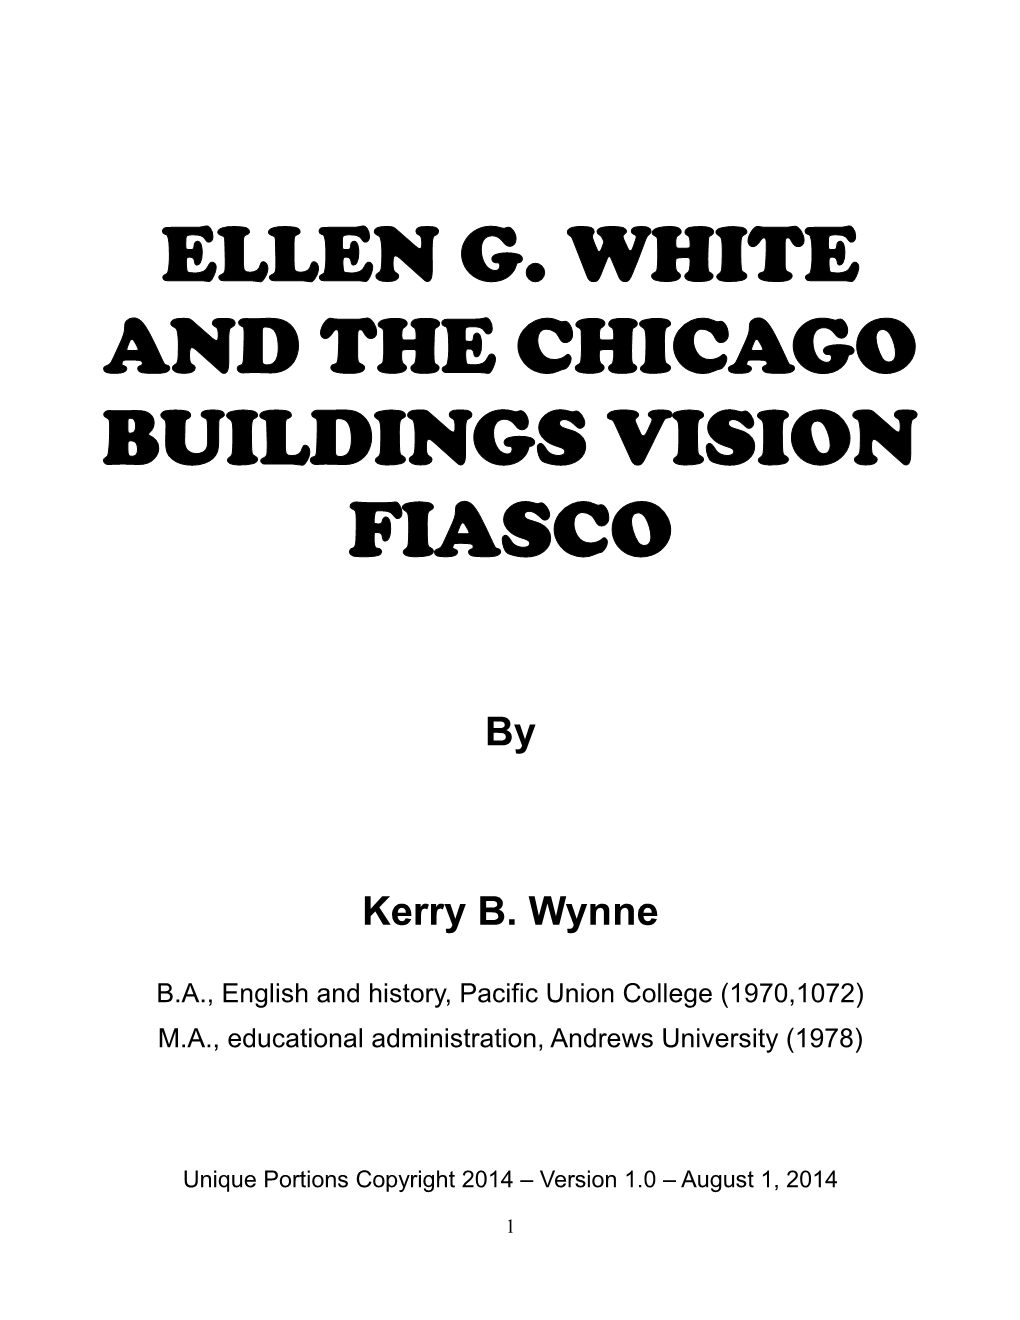 Ellen G. White and the Chicago Buildings Vision Fiasco